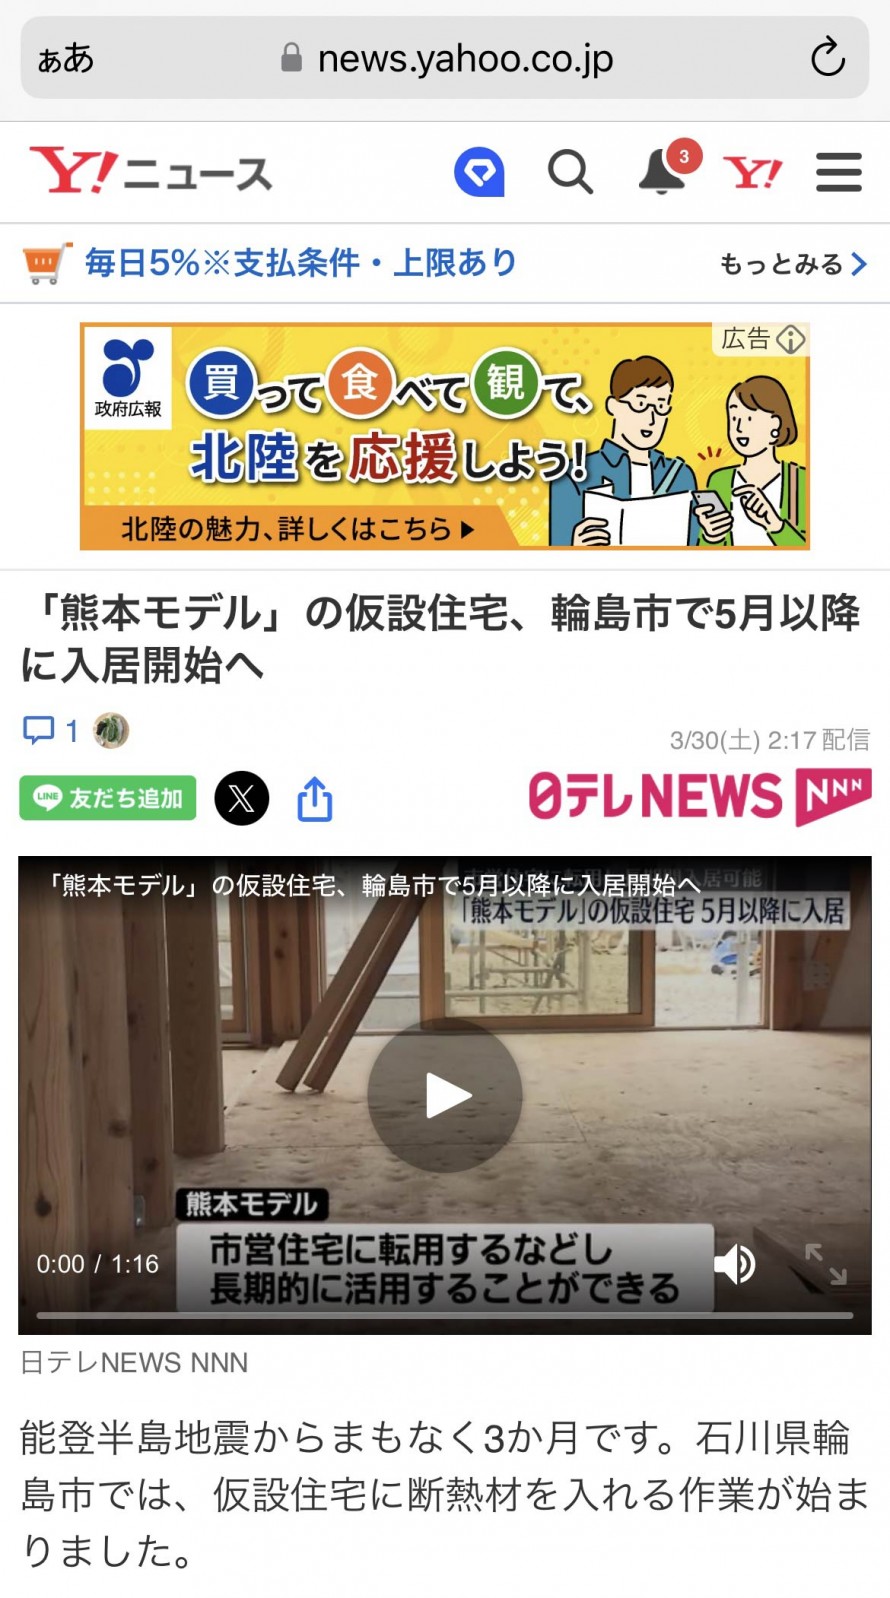 Yahoo！ニュース3/30(土) 2:17配信日　テレNEWS NNN